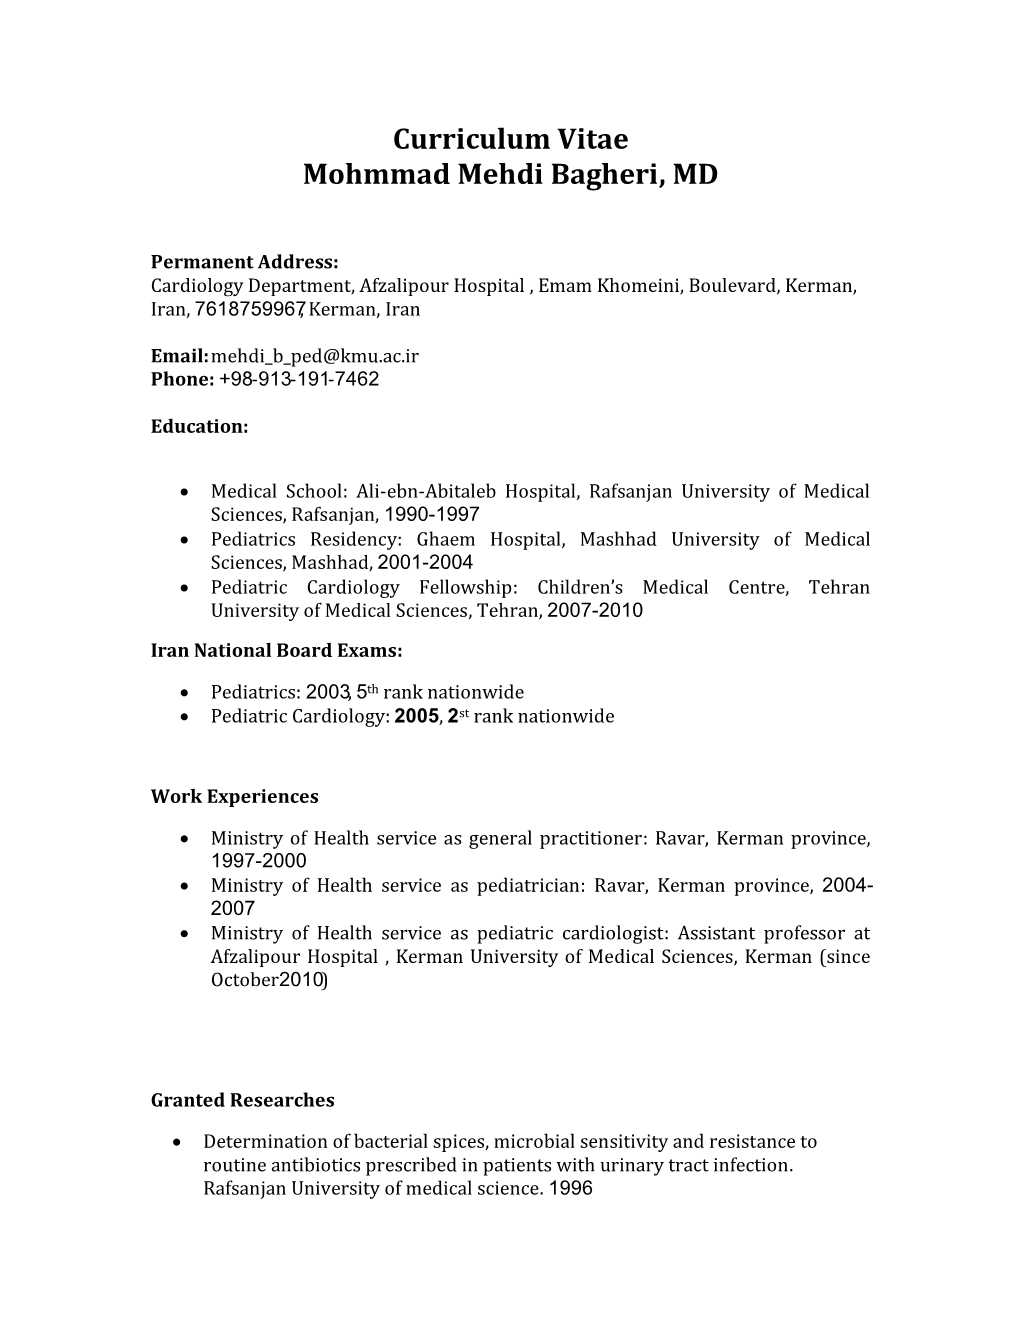 Curriculum Vitae Mohmmad Mehdi Bagheri, MD